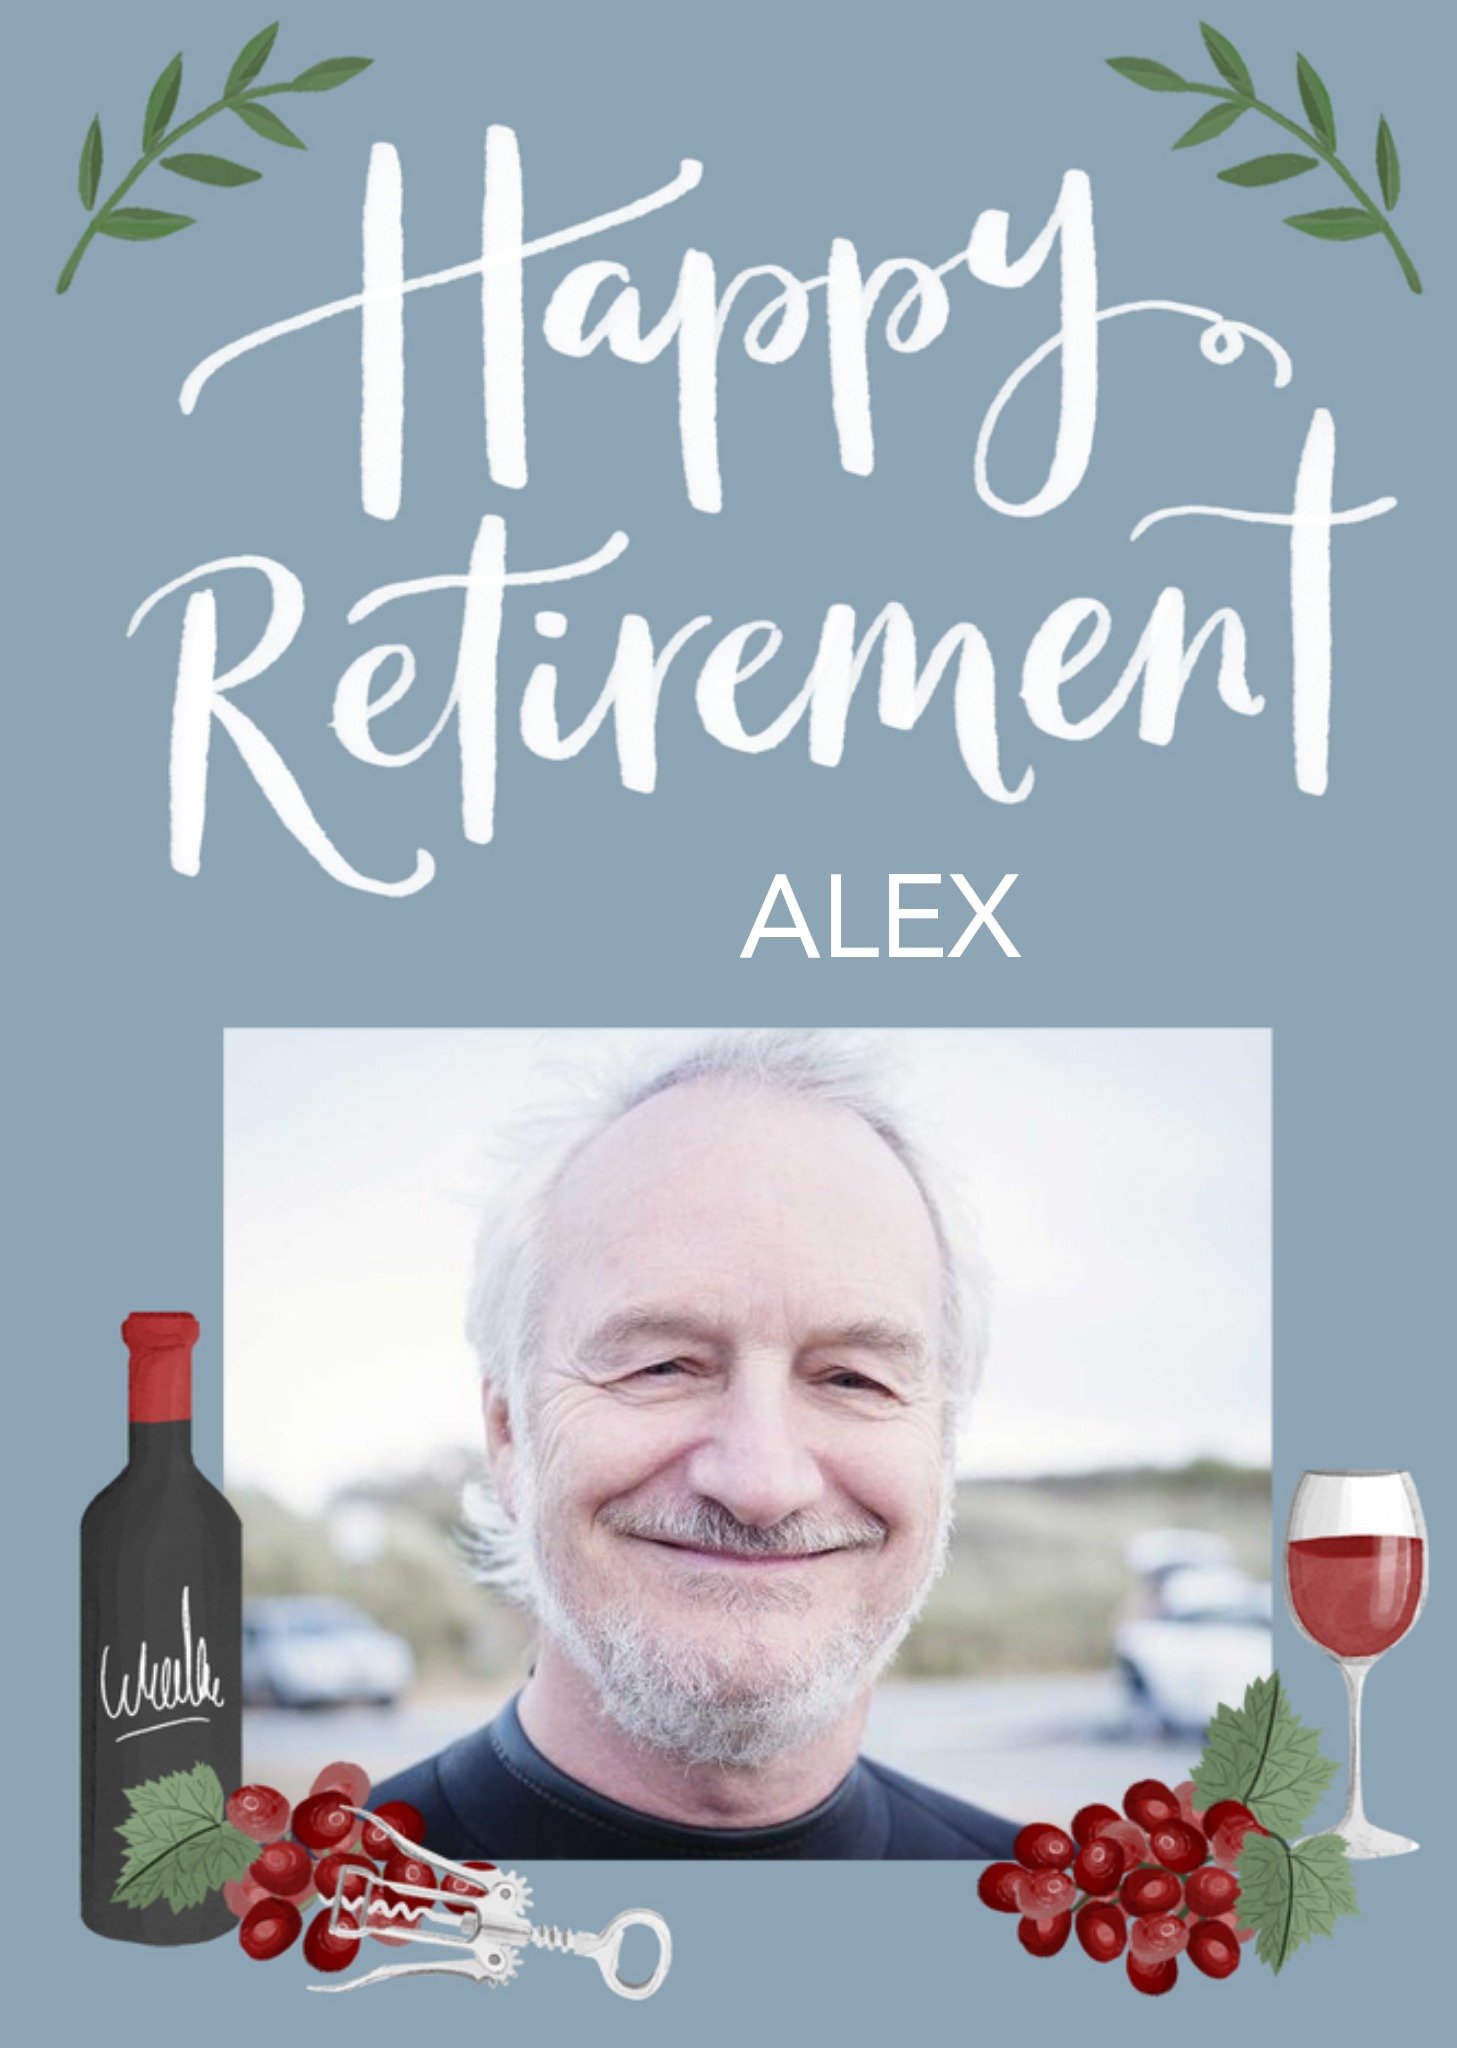 Okey Dokey Design Illustration Red Wine And Grapes Happy Retirement Photo Upload Card, Large